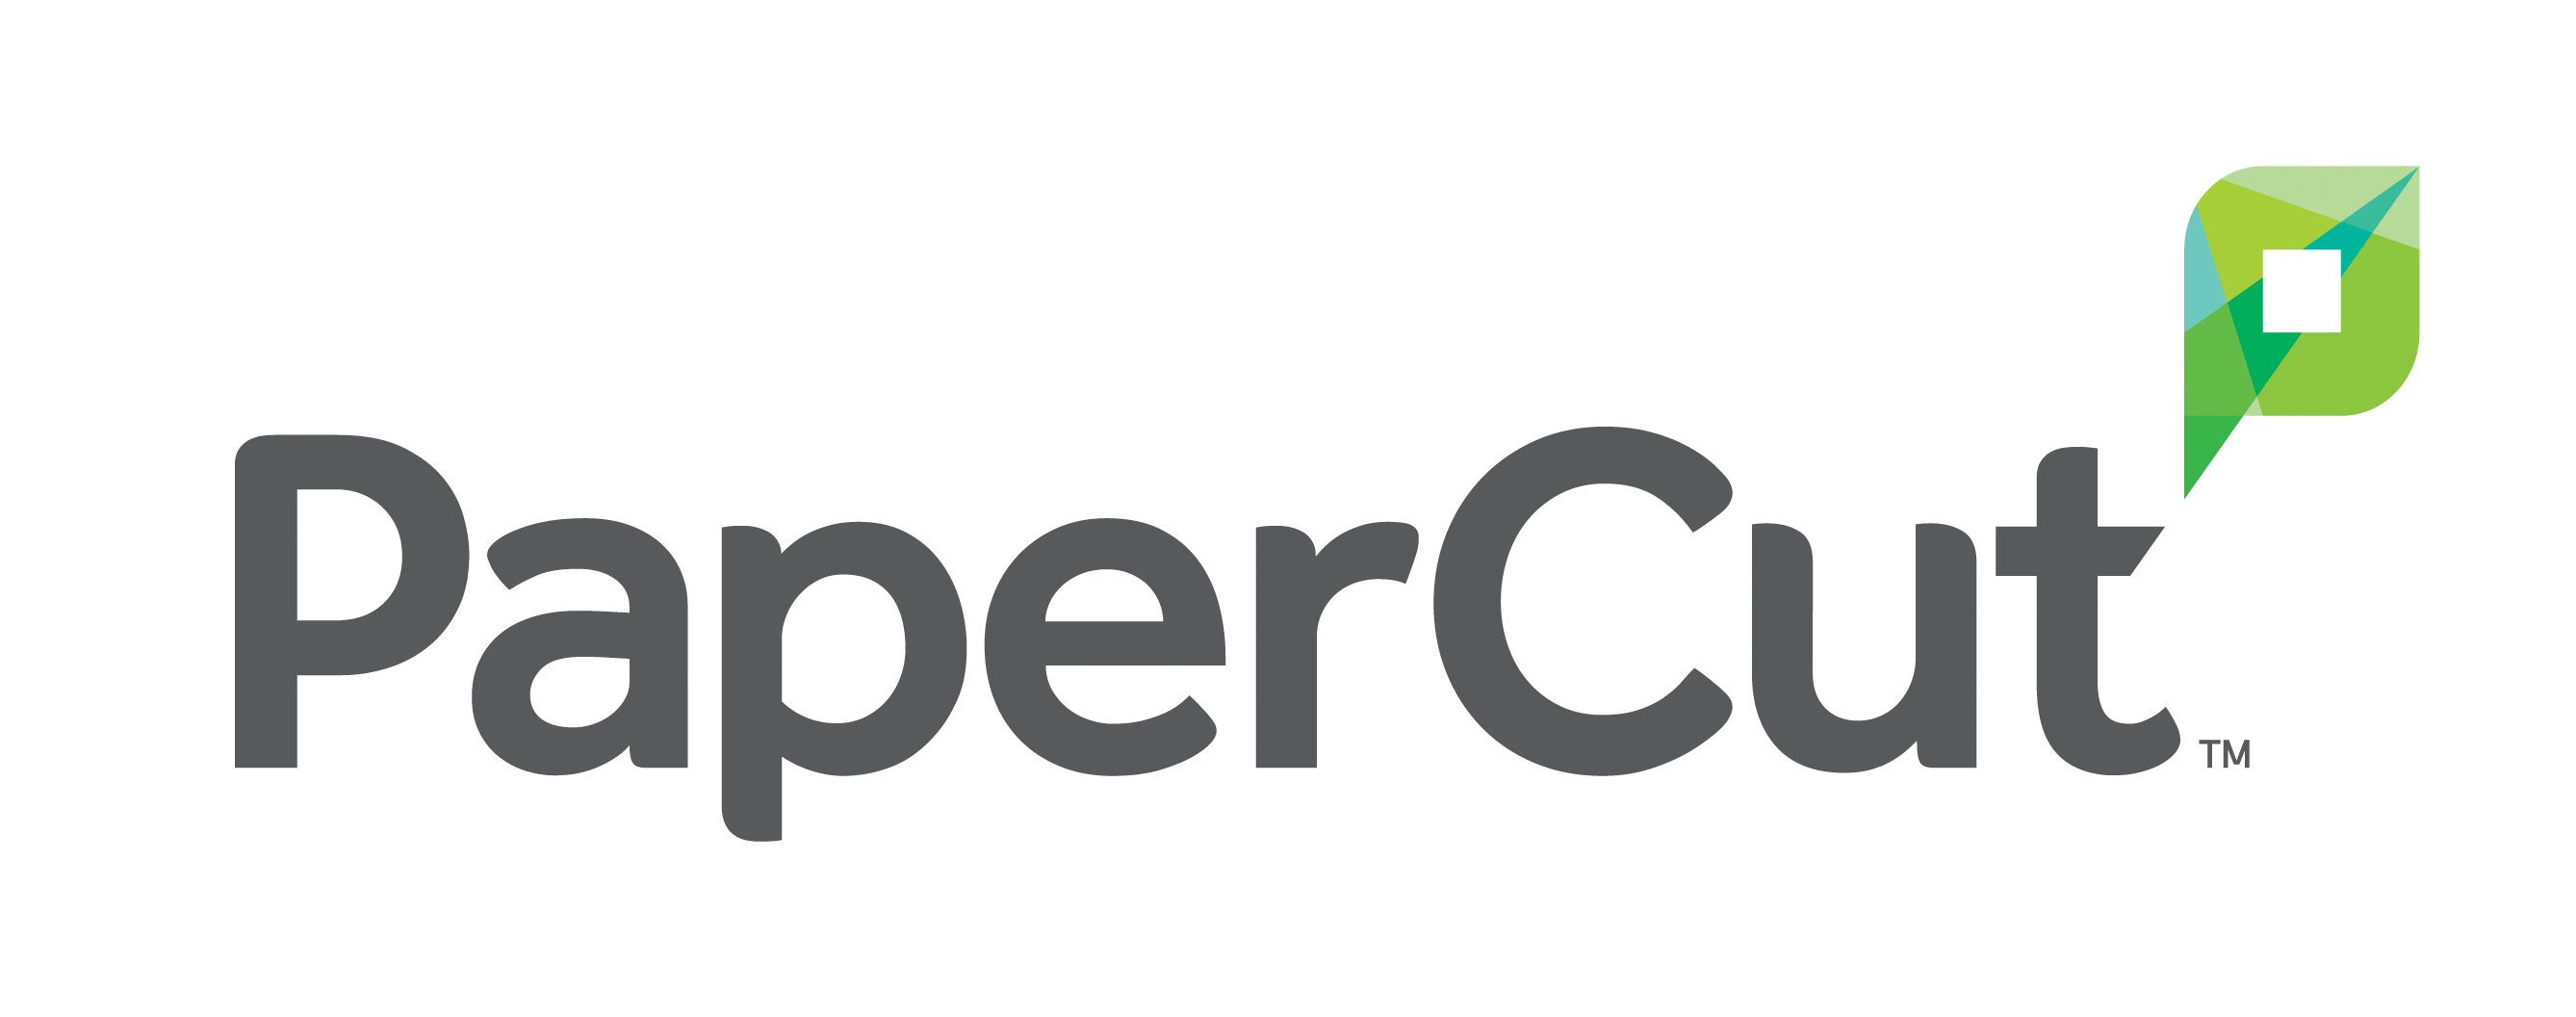 papercut-logo.png